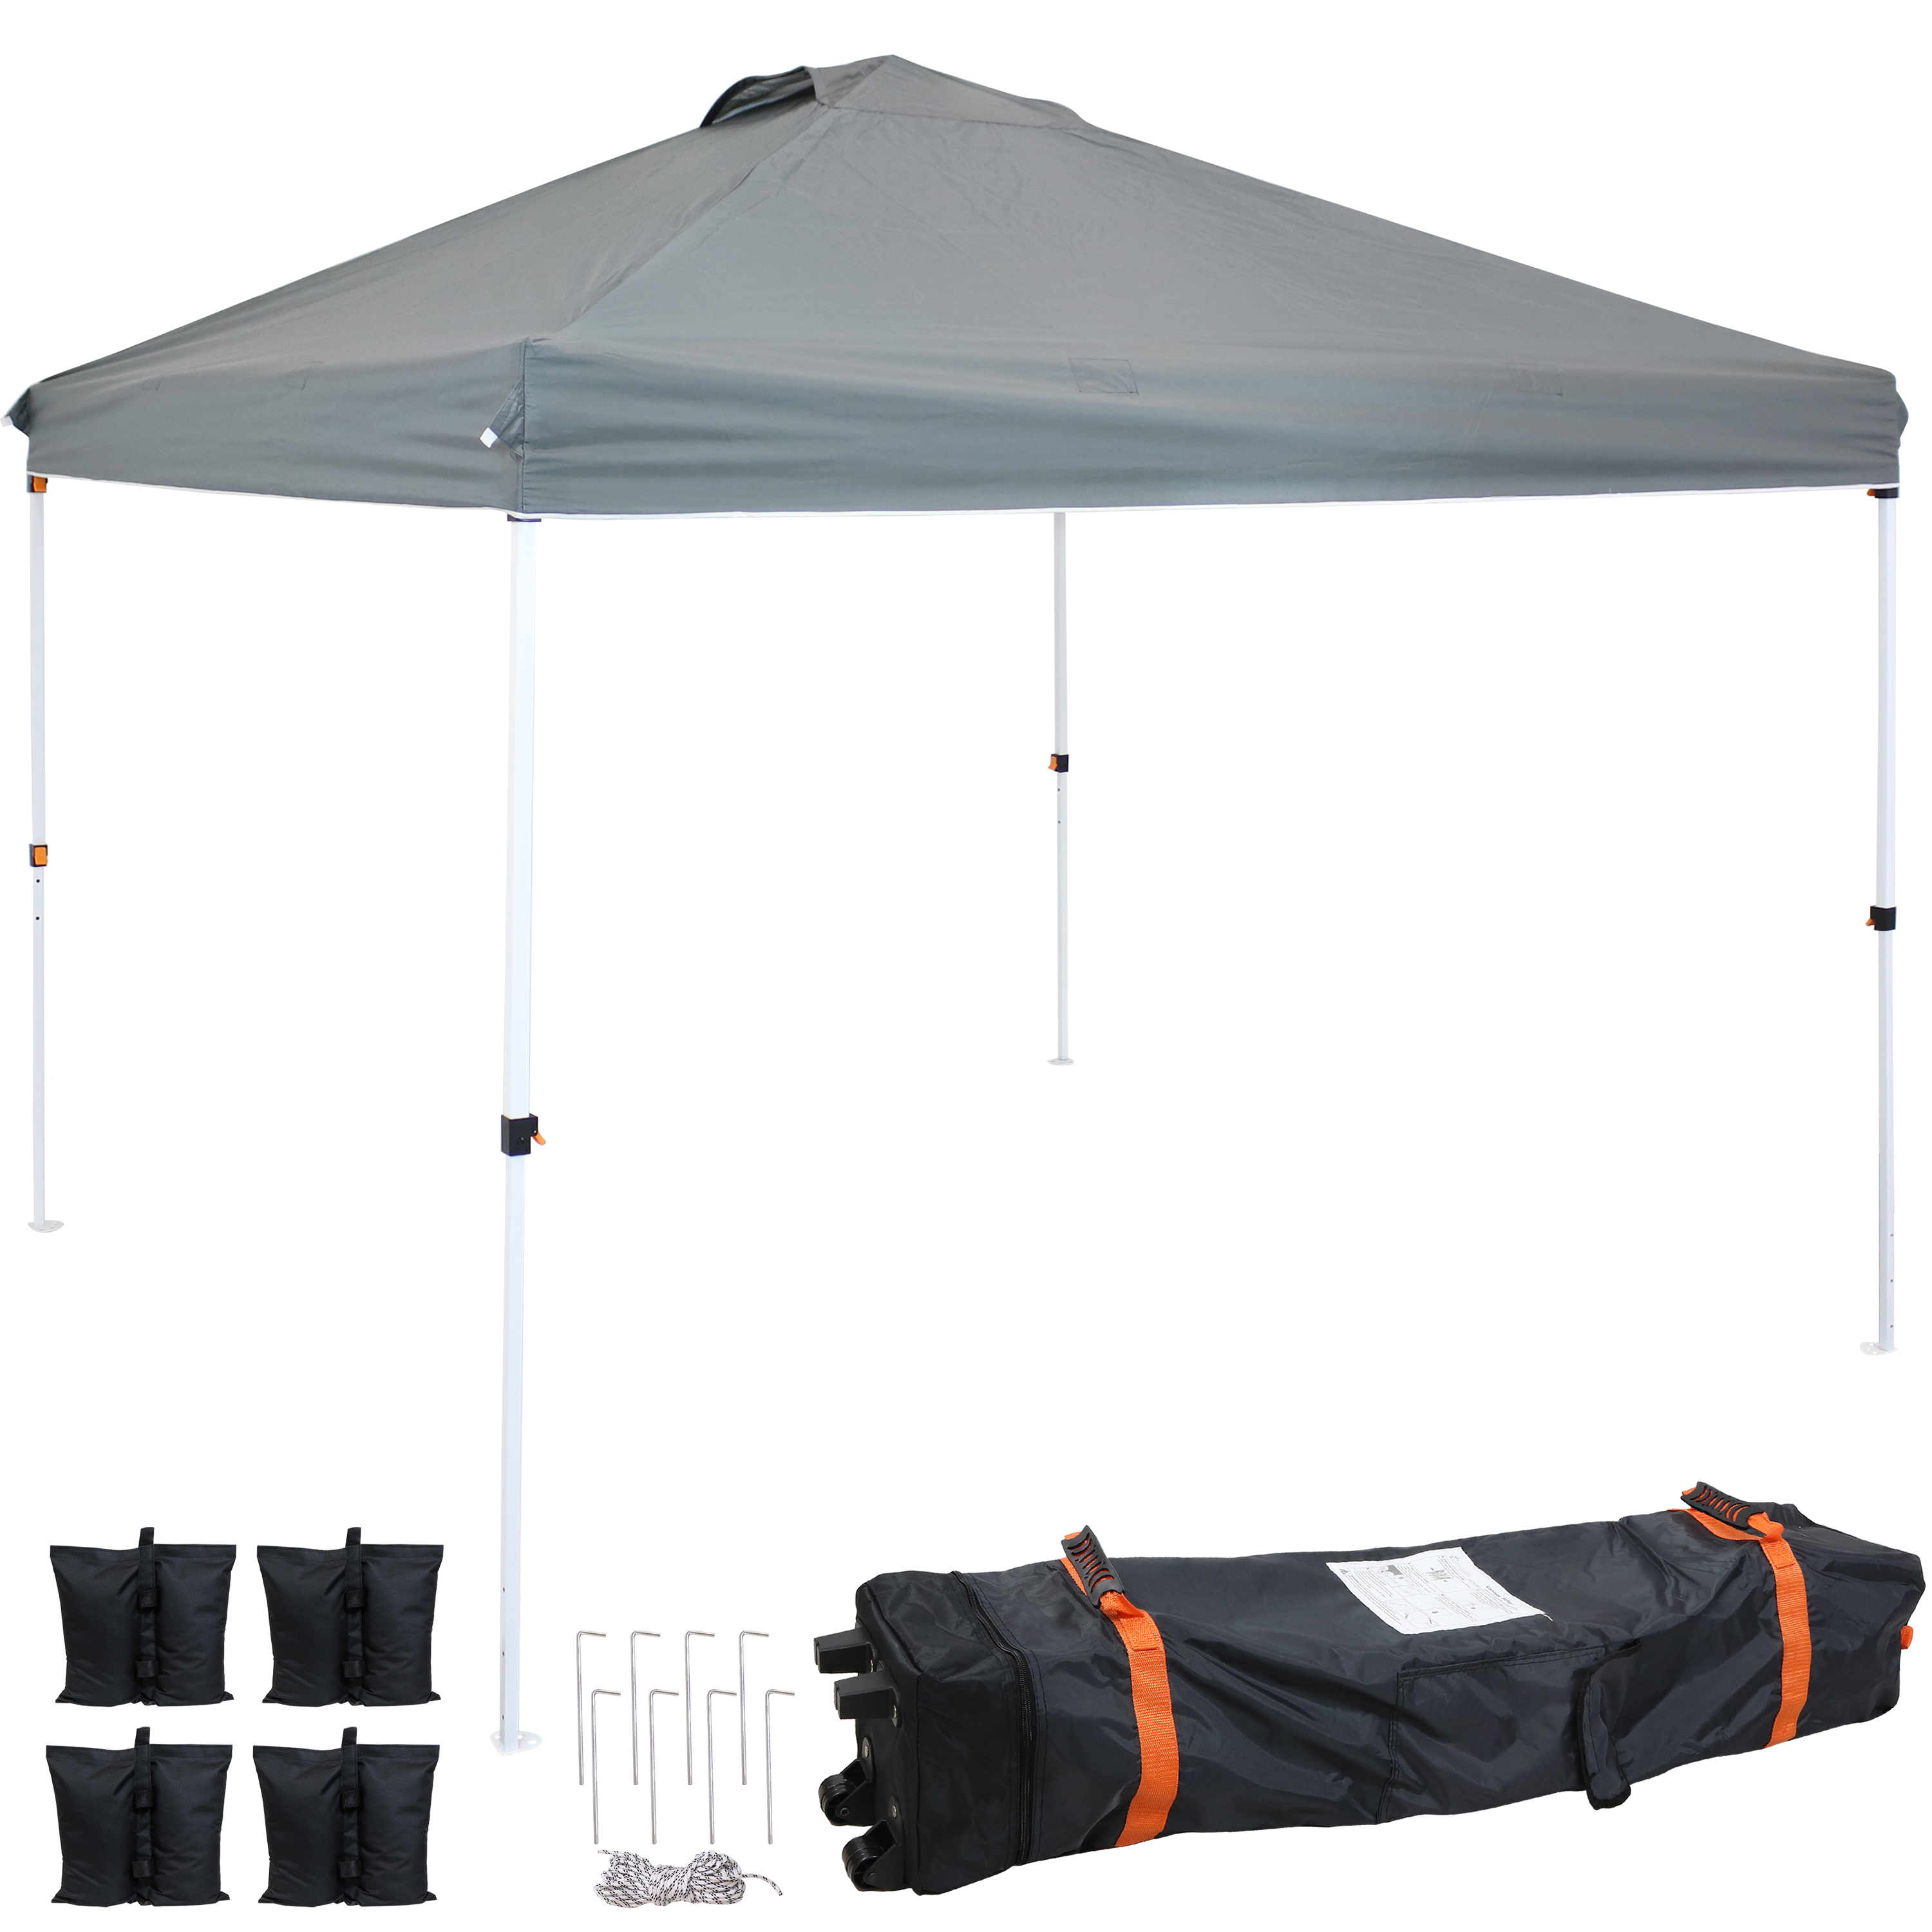 Sunnydaze 10x10 Foot Premium Pop-Up Canopy and Carry Bag/Sandbags - Gray